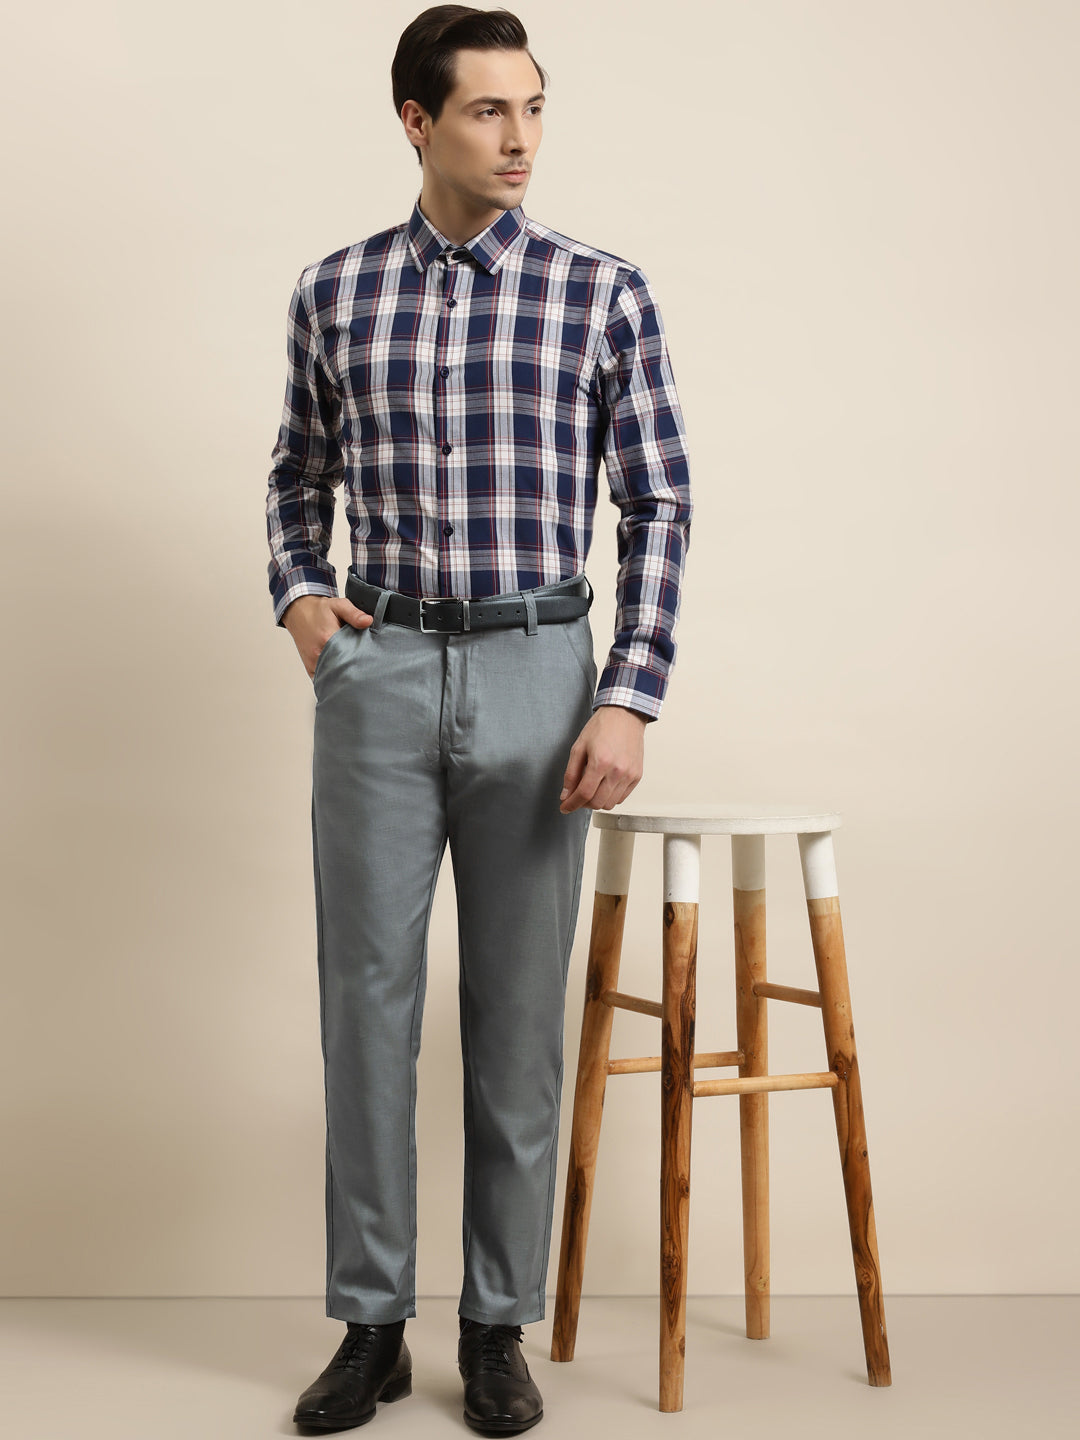 Men's Cotton Blend Charcoal grey Solid Trouser - Sojanya